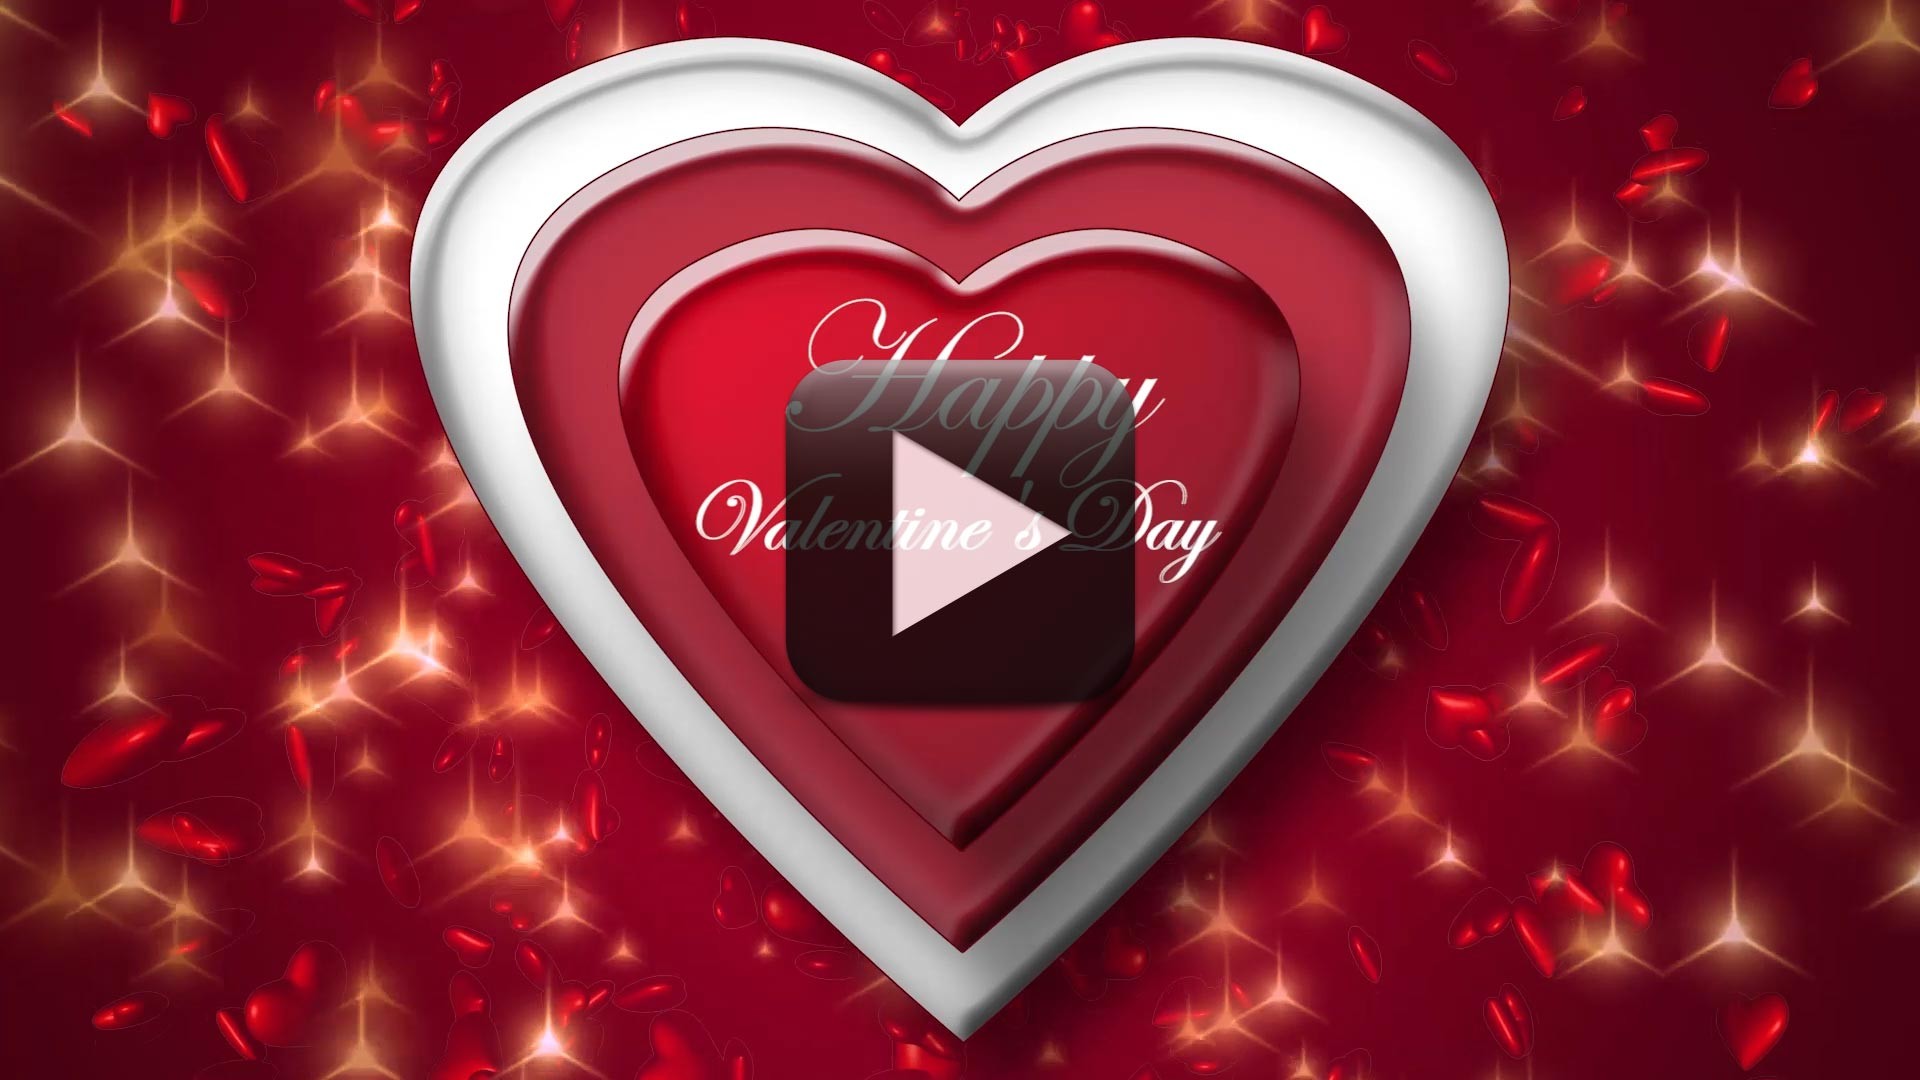 1920x1080 Happy Valentine Day Wishes Video Background Free Download | All Design  Creative